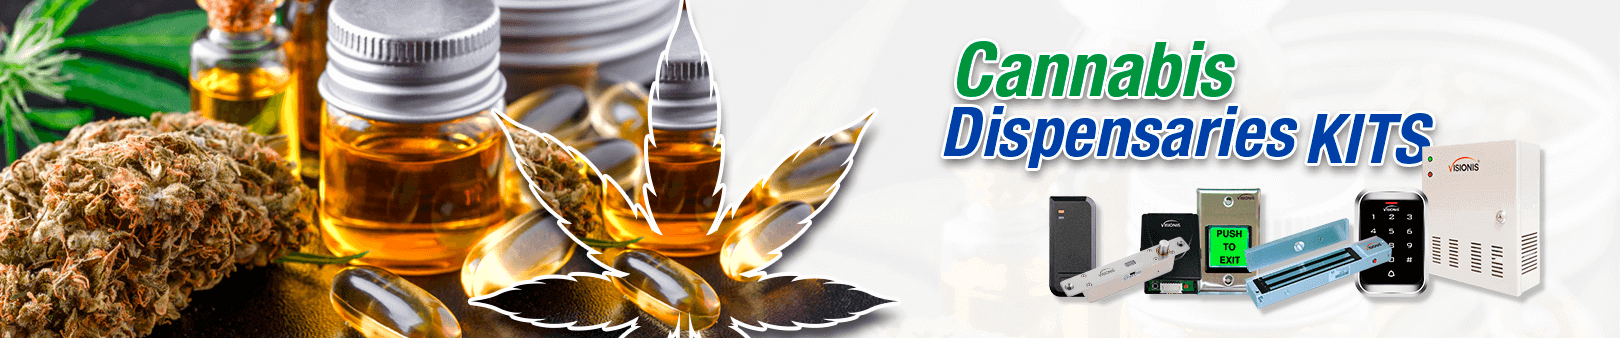 Cannabis Dispensaries Kits Access Control System